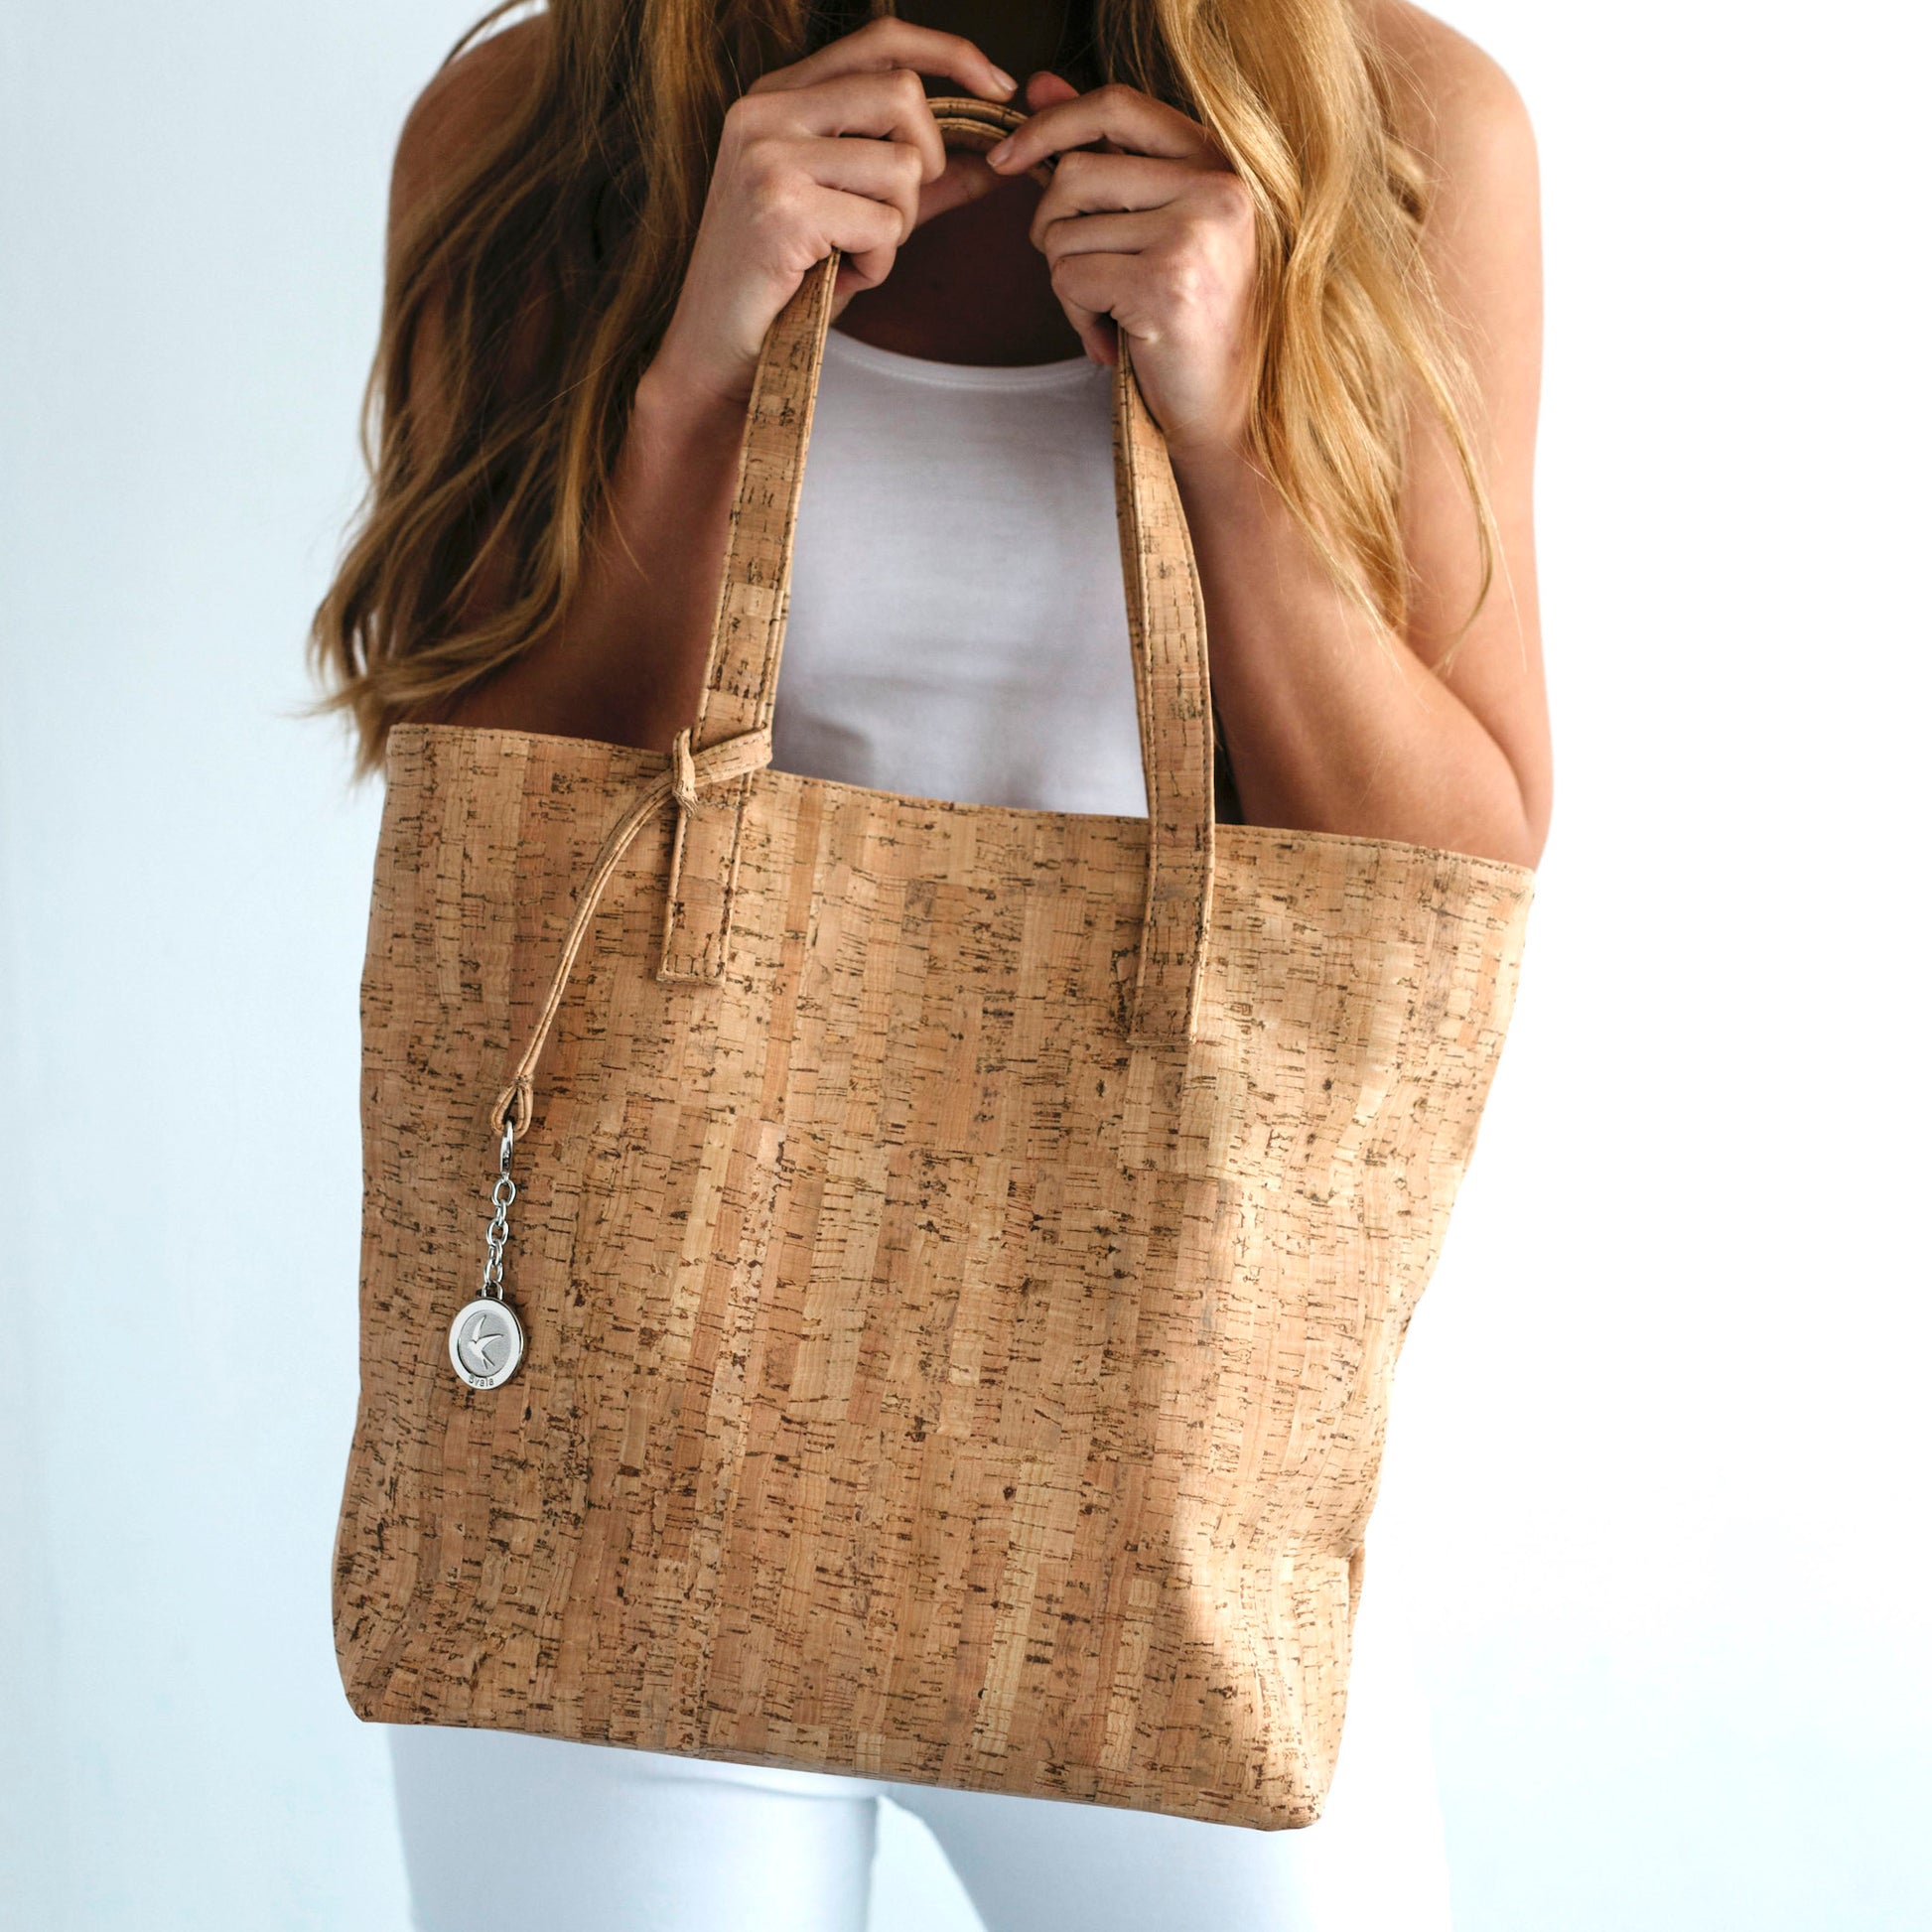 Svala Simma luxury vegan tote handbag in natural cork